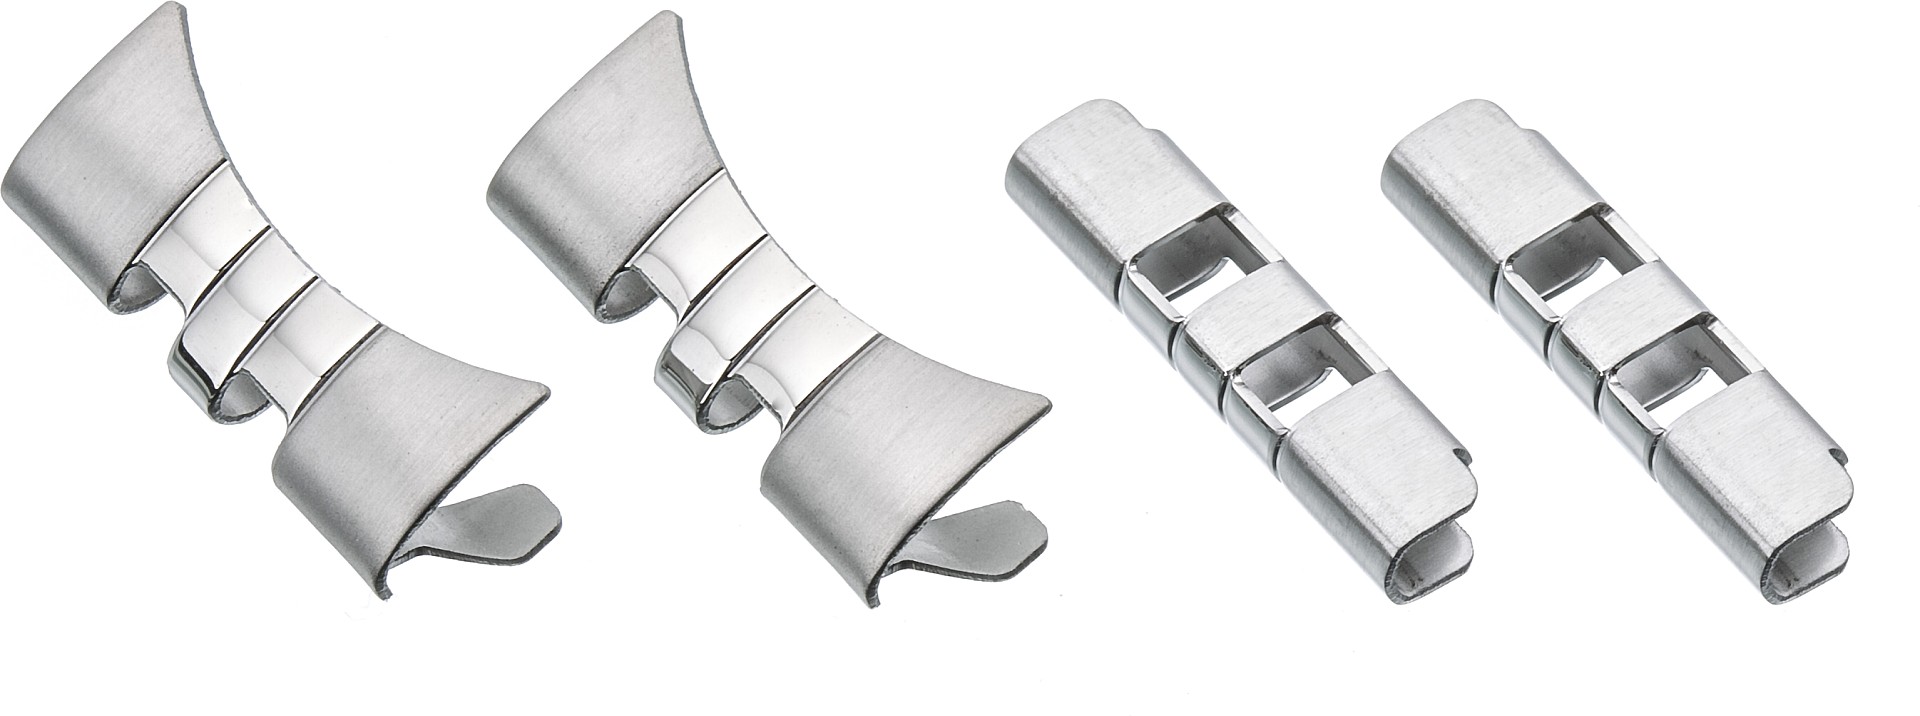  Eichmüller "Solid stainless steel fastener tape" 